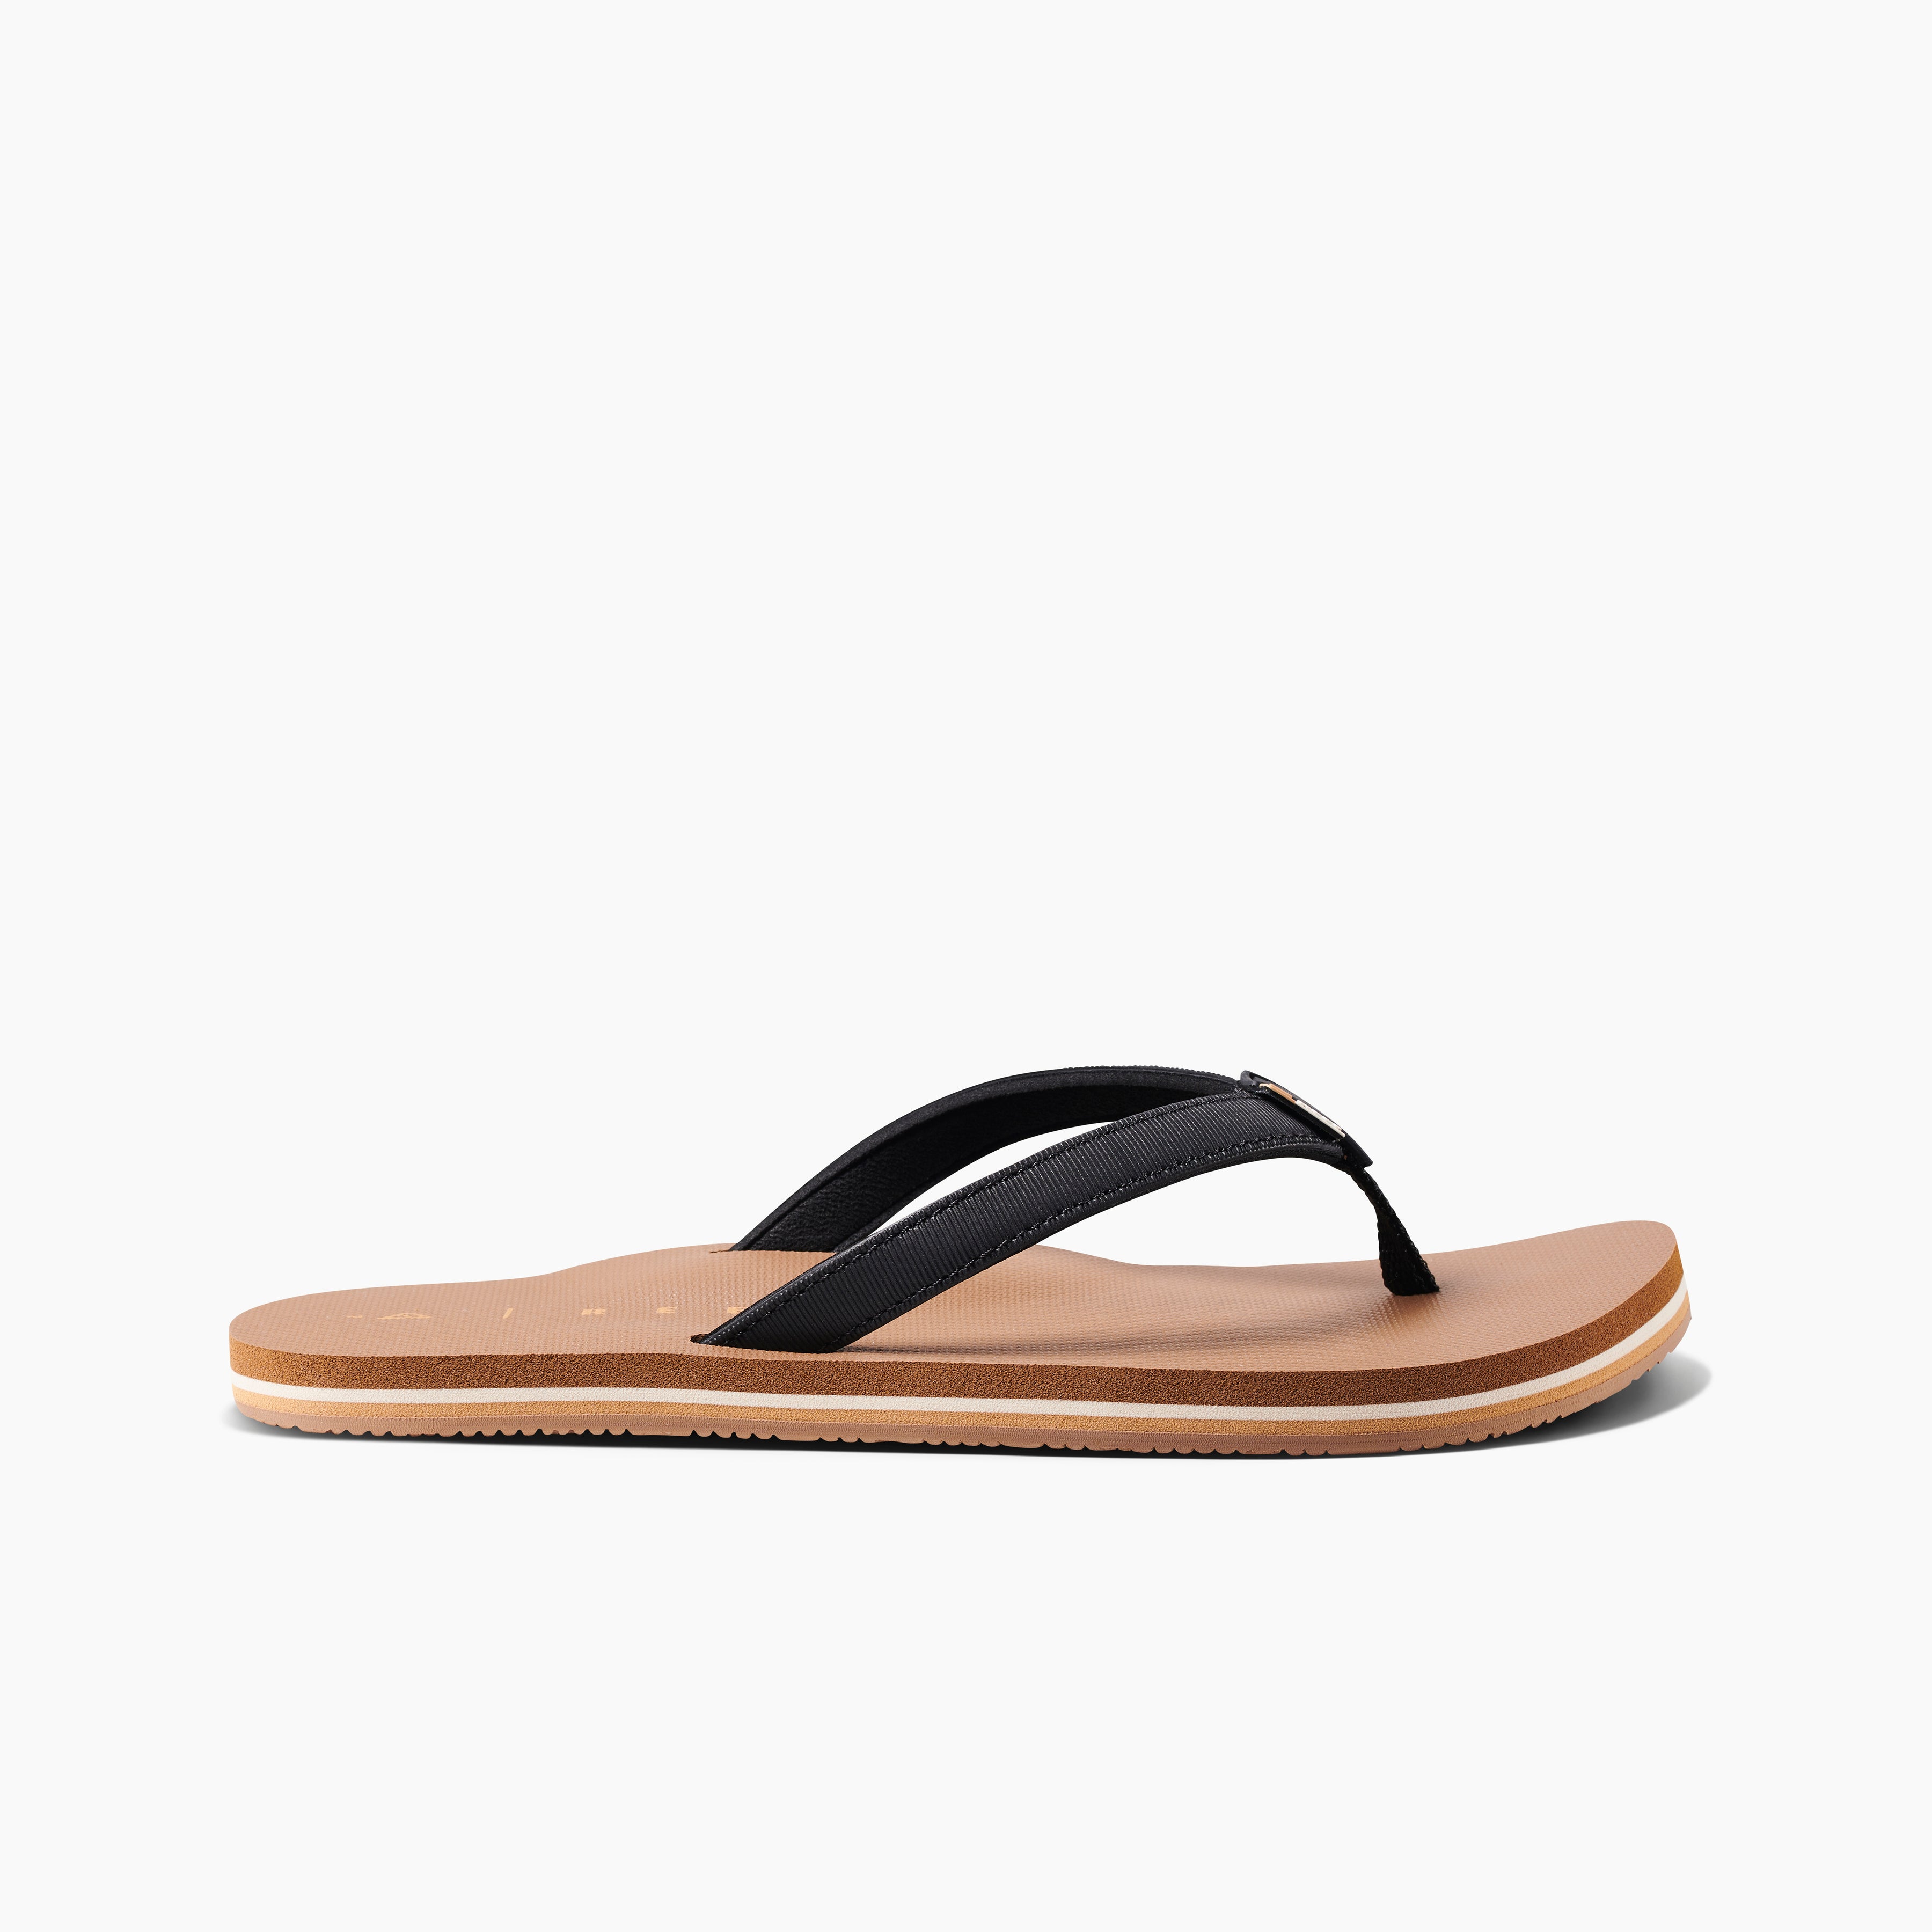 Women's Reef Solana Sandals in Black/Tan | REEF®